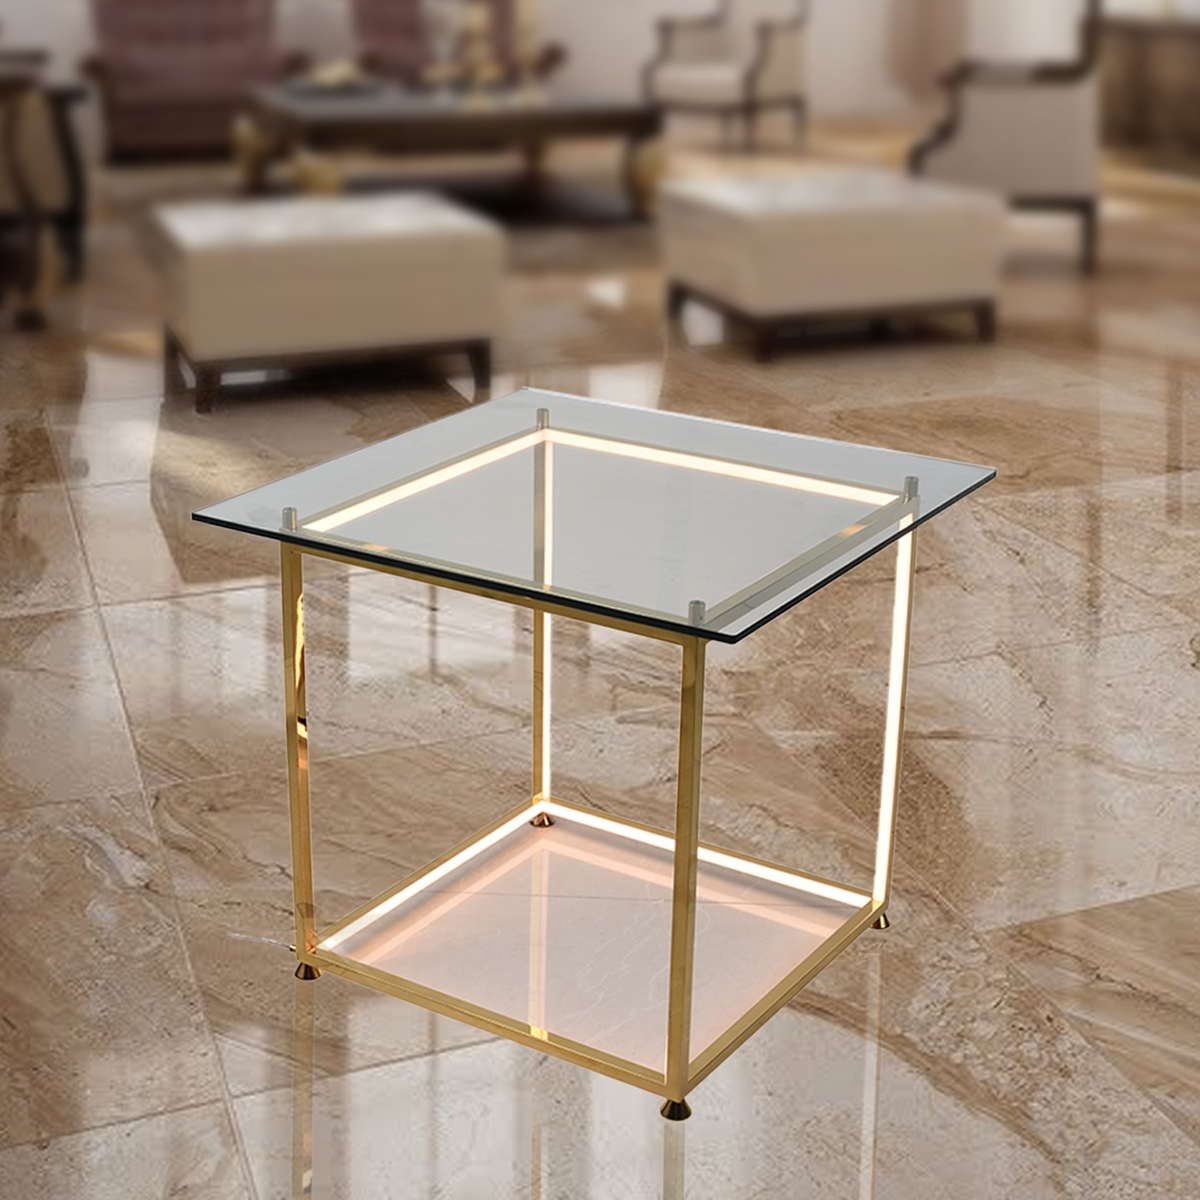 Table Lamp TT20160912-450 Glass-LED 23W Warm White - Gold